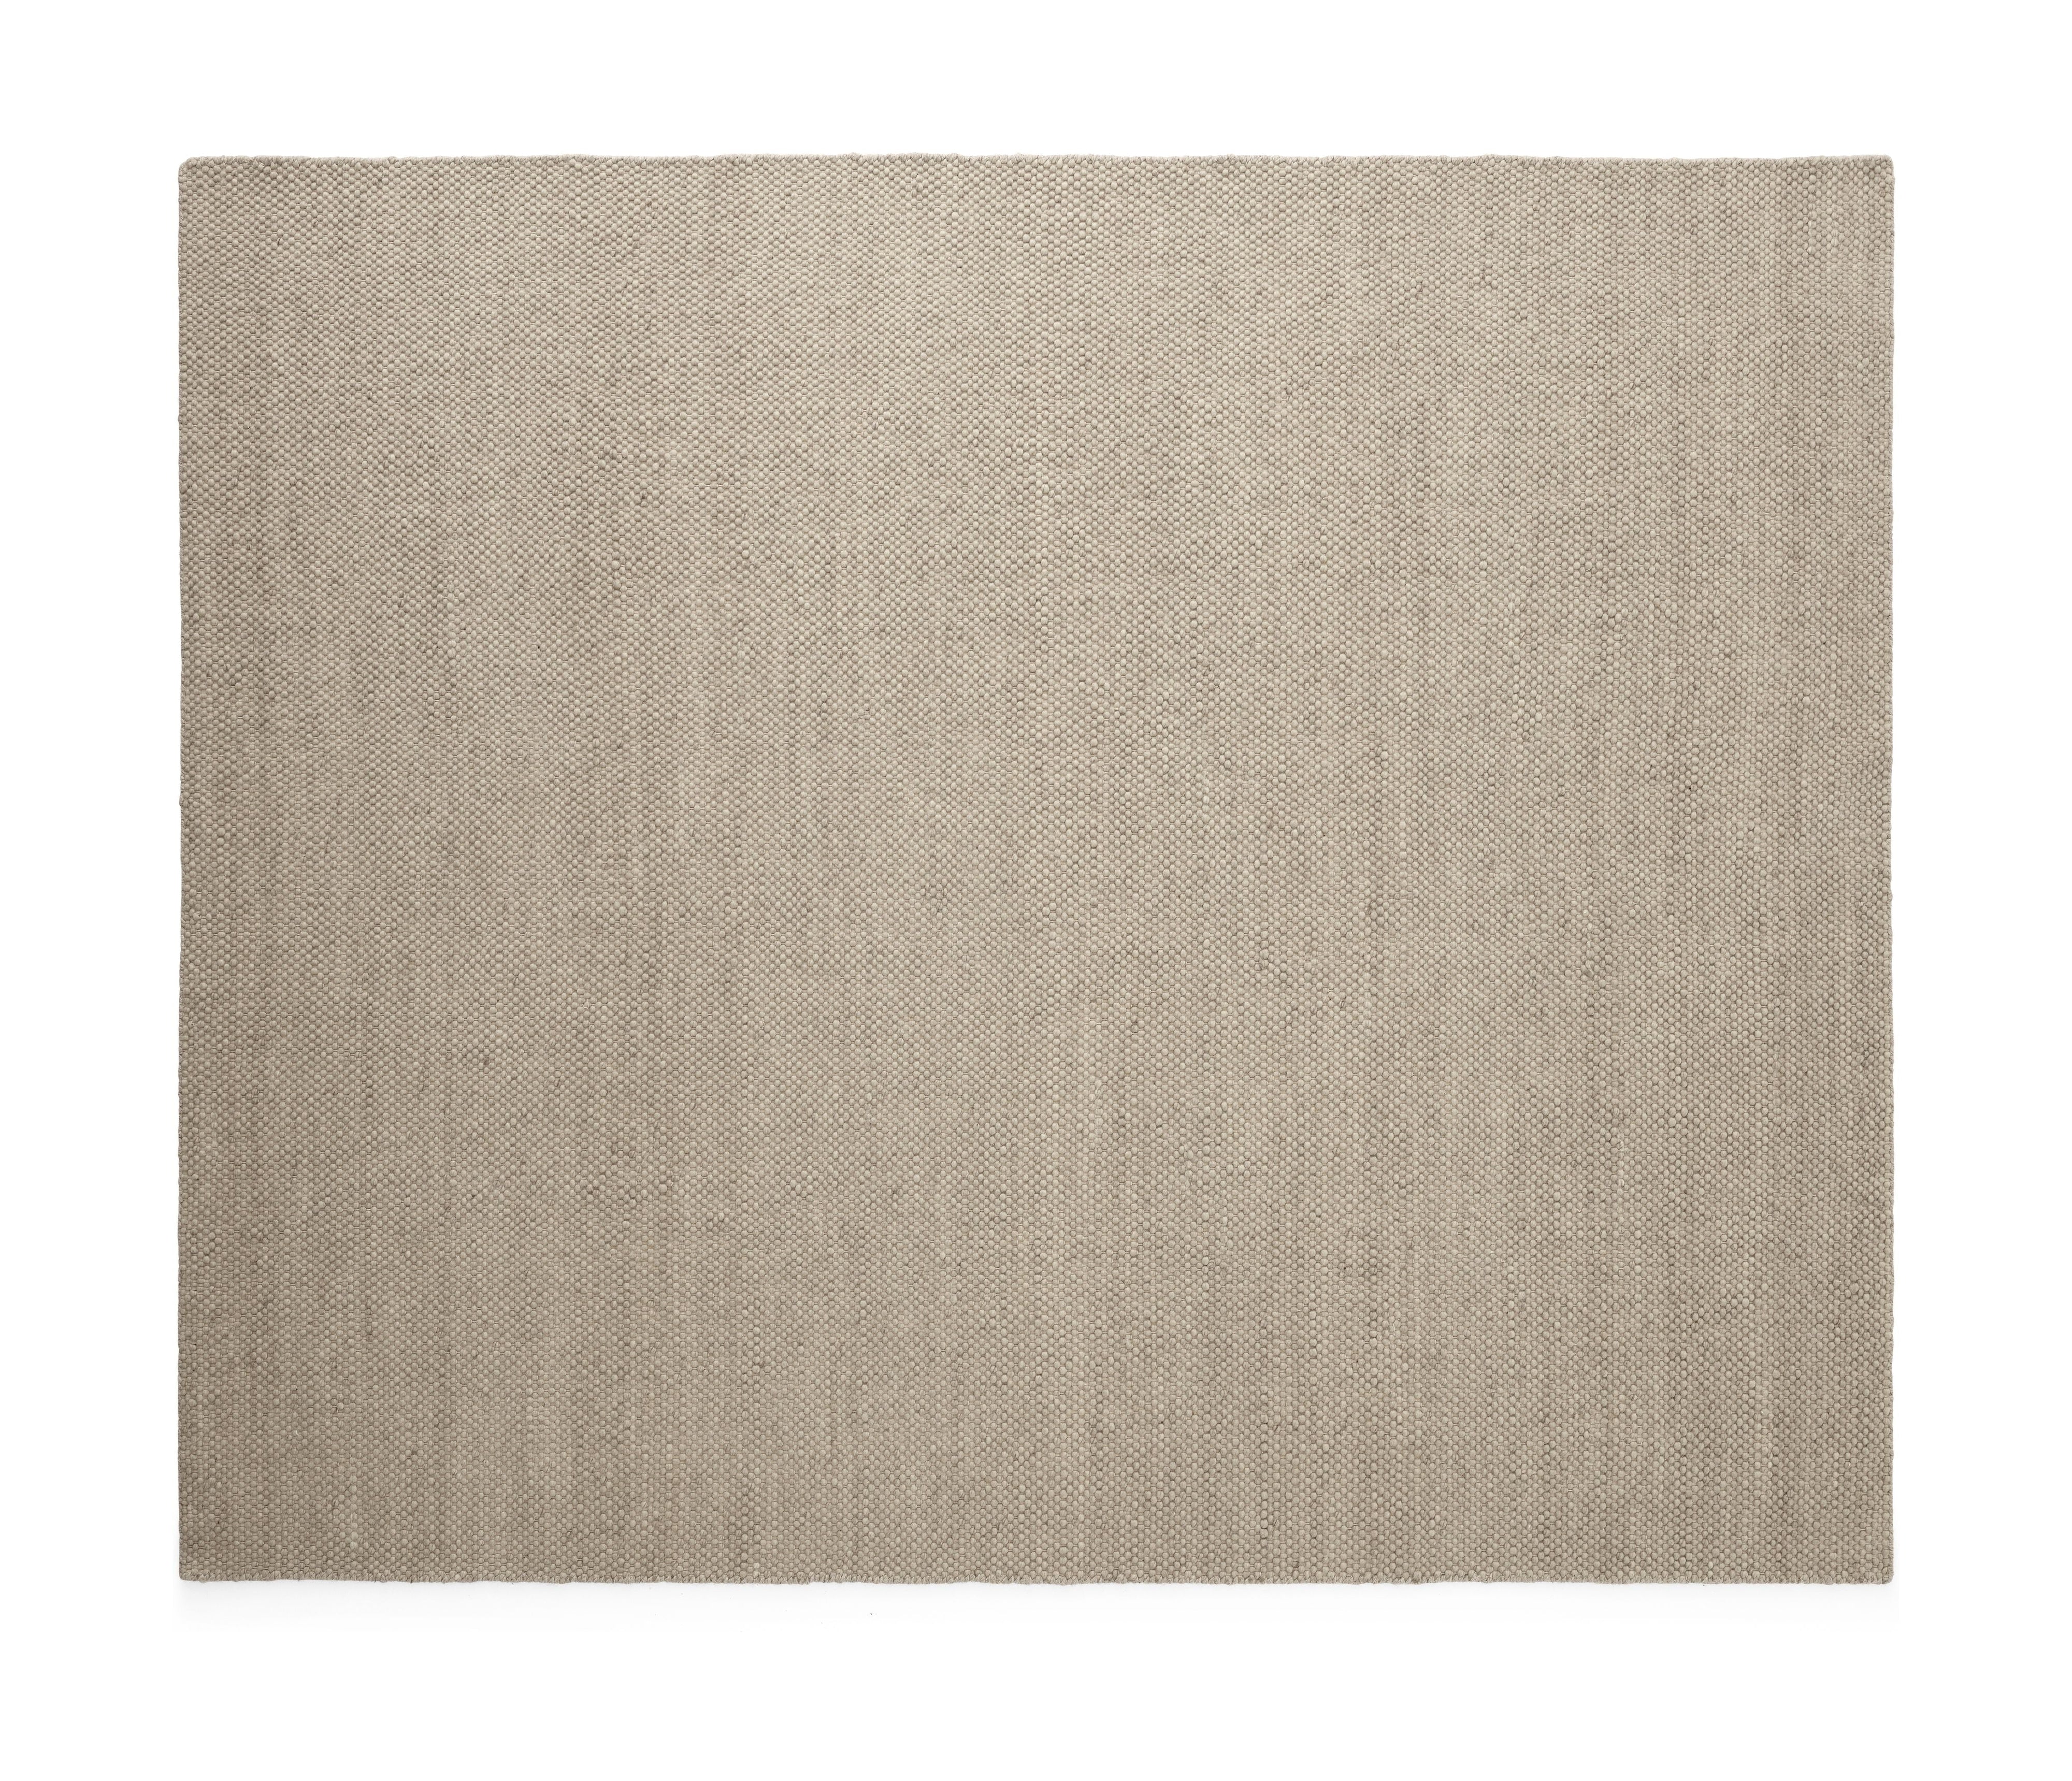 Vipp147 uldtæppe, 400x300 cm, mørk beige